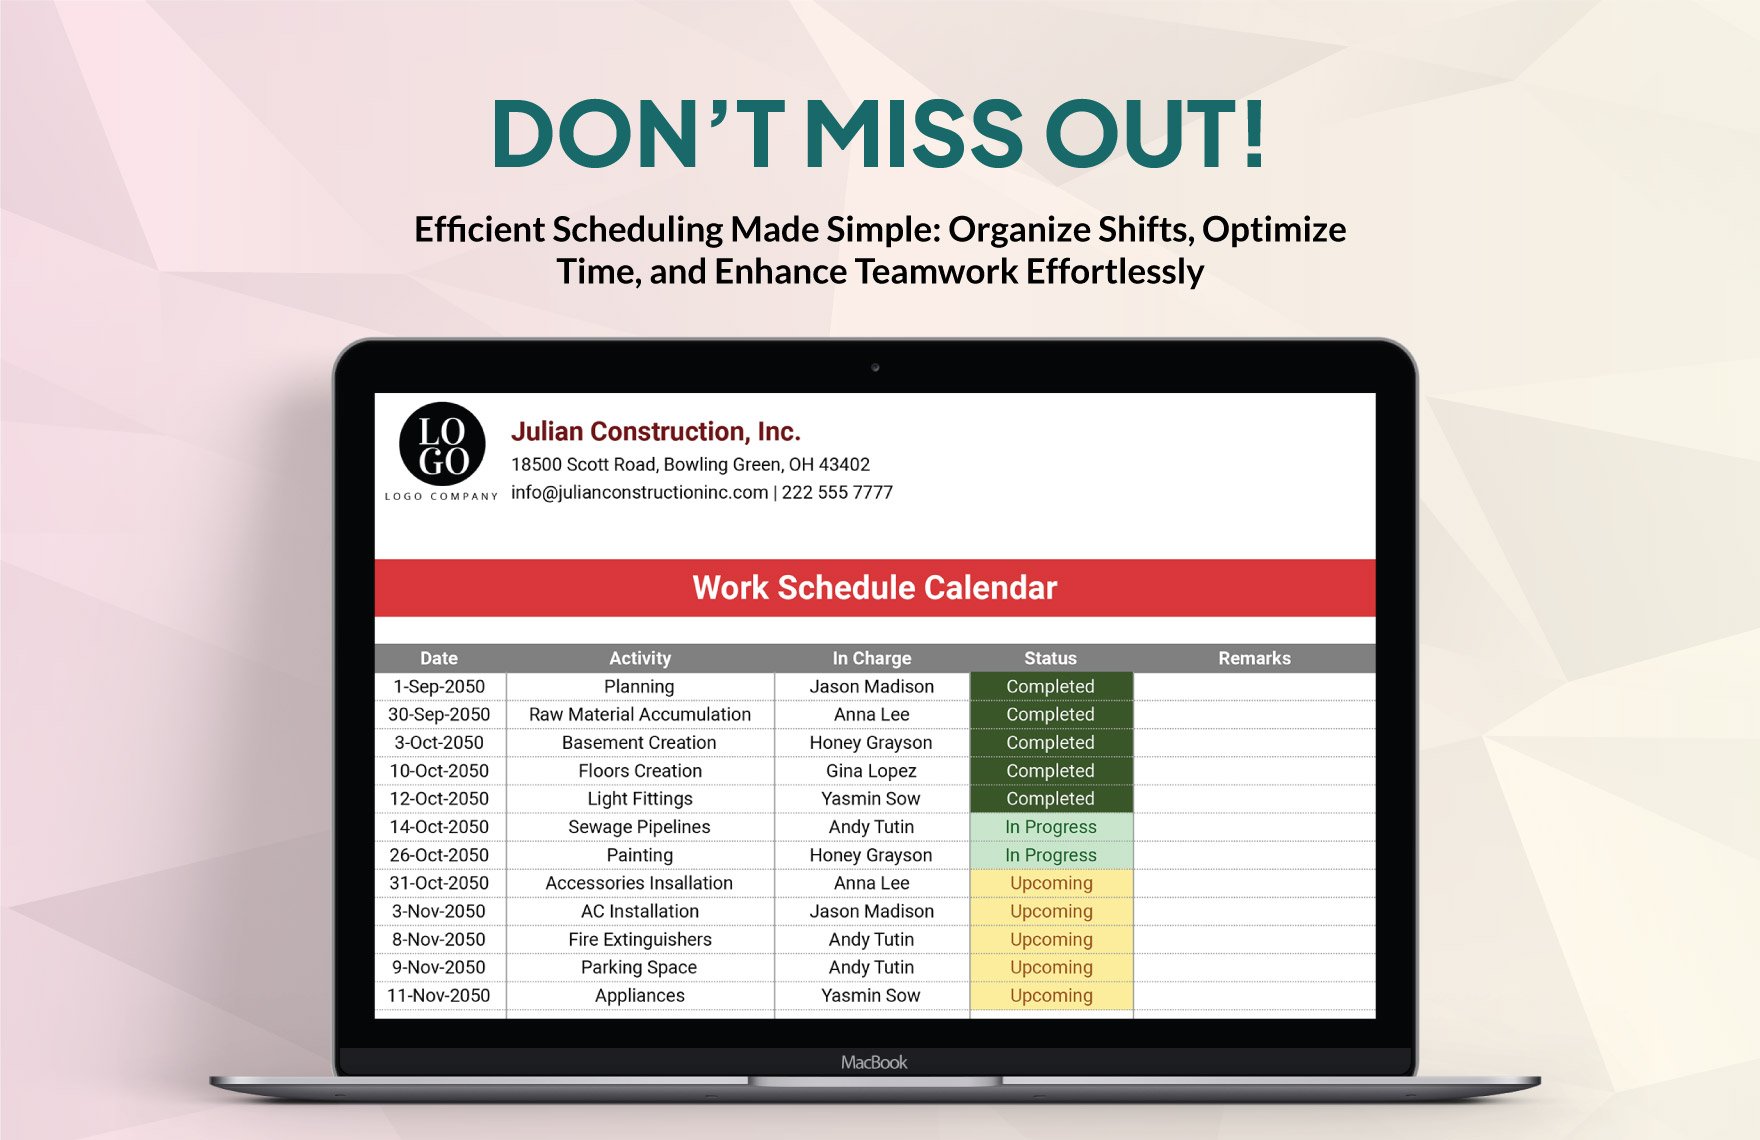 Work Schedule Calendar